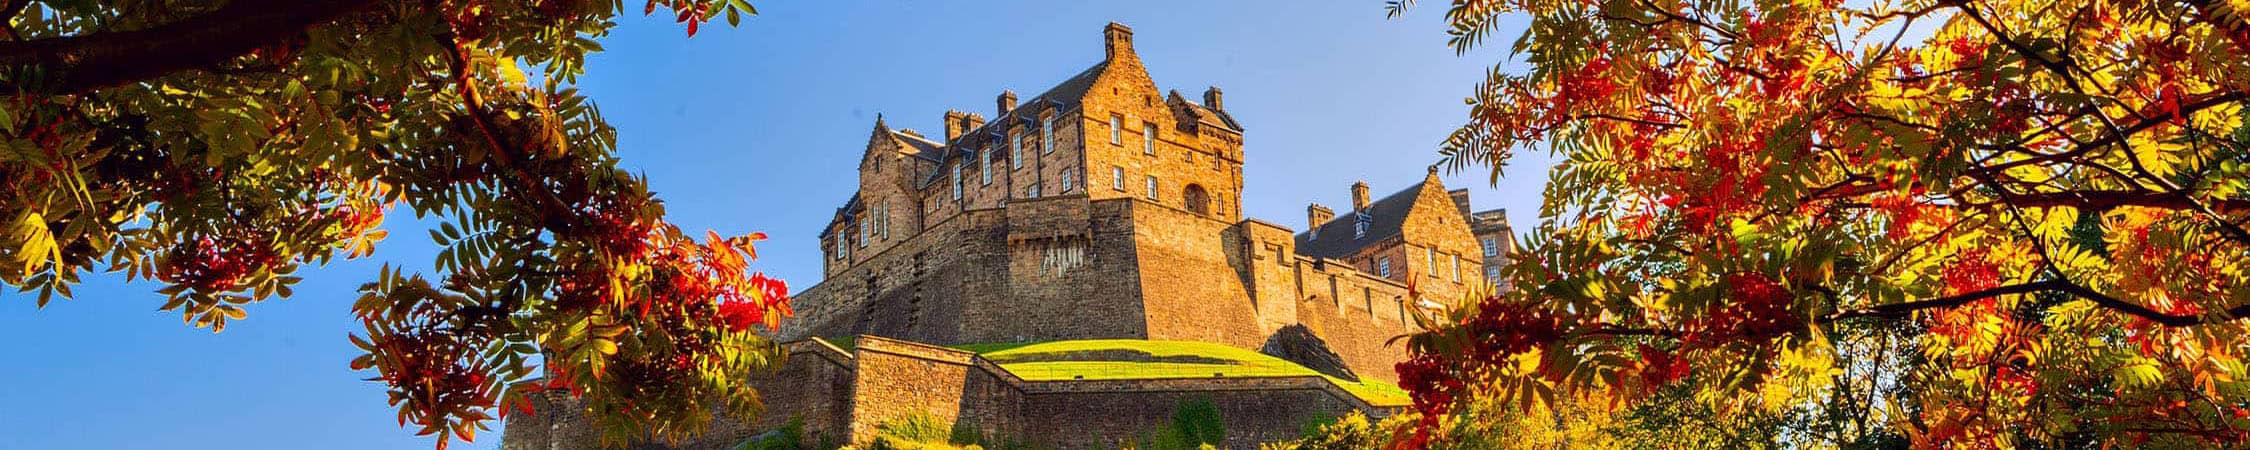 Lochs and Glens coach holidays to Edinburgh castle in Autumn